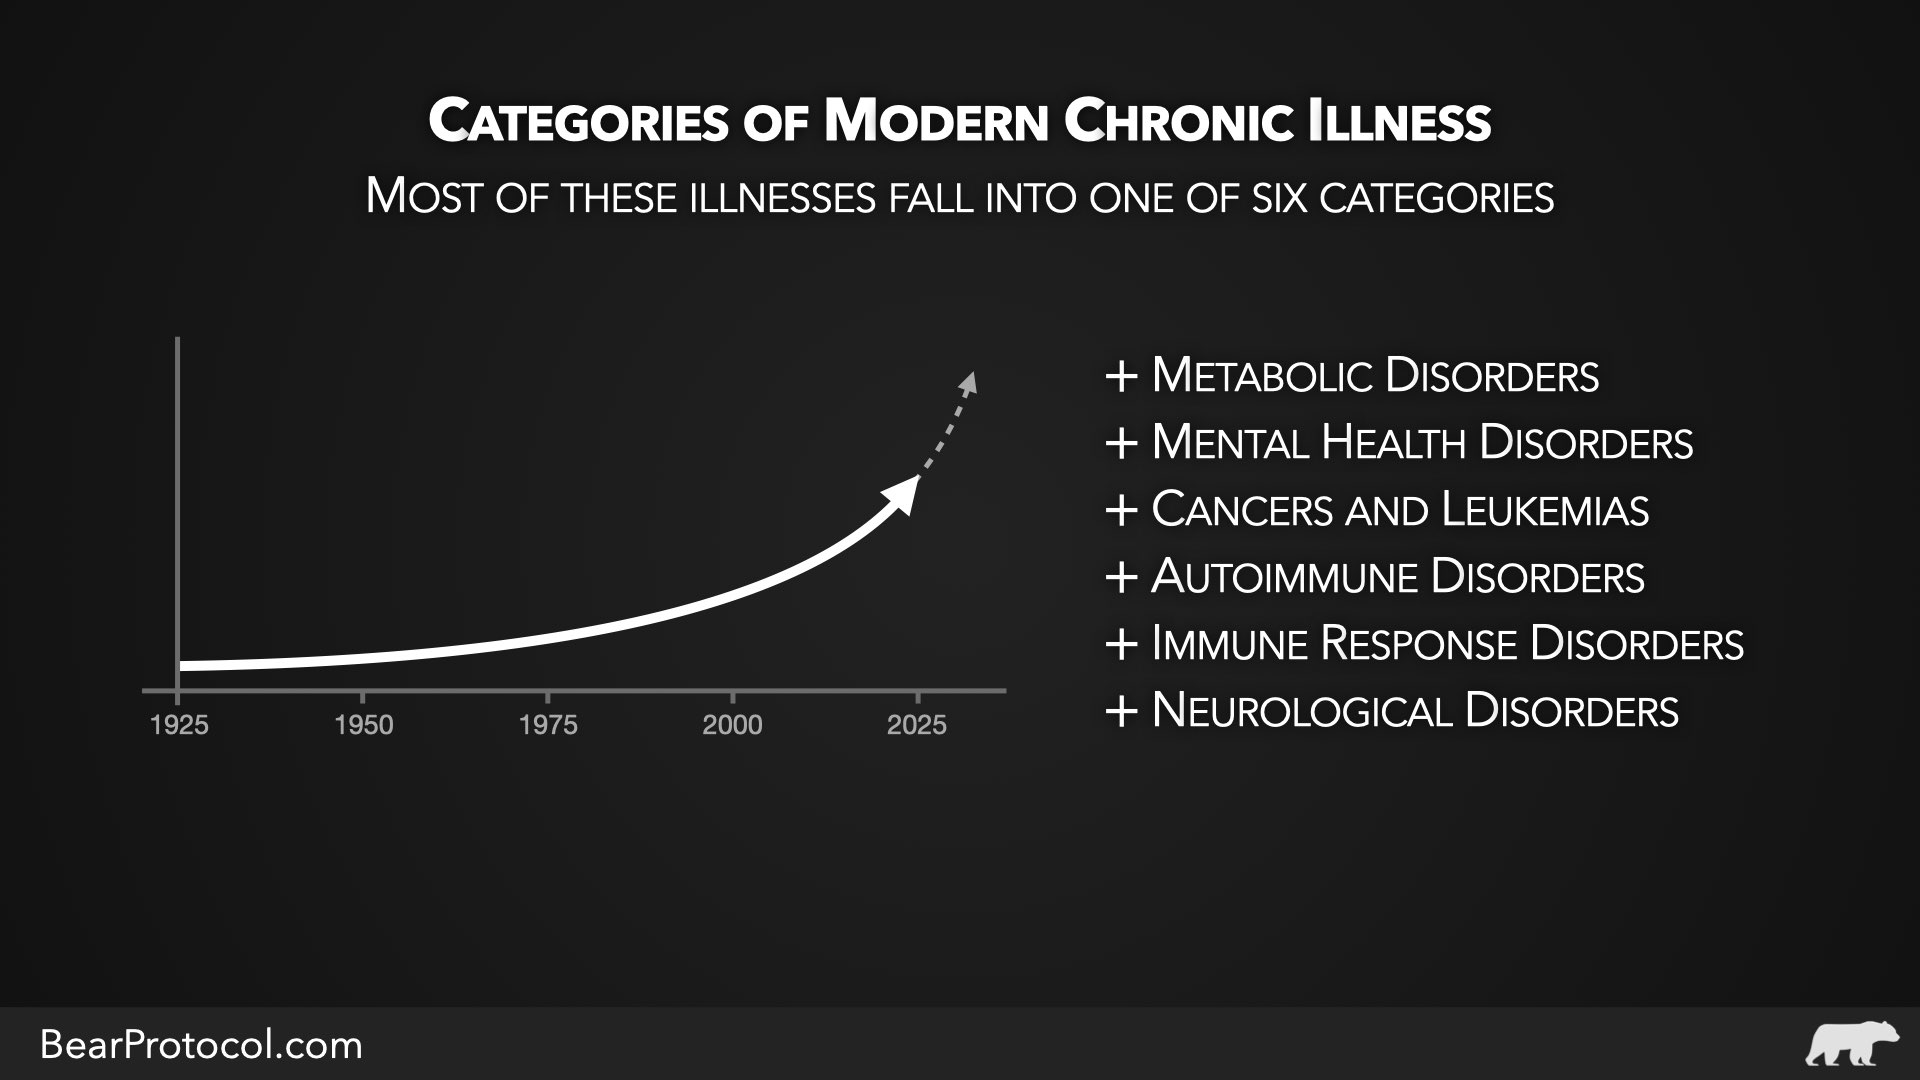 Types of common chronic illnesses